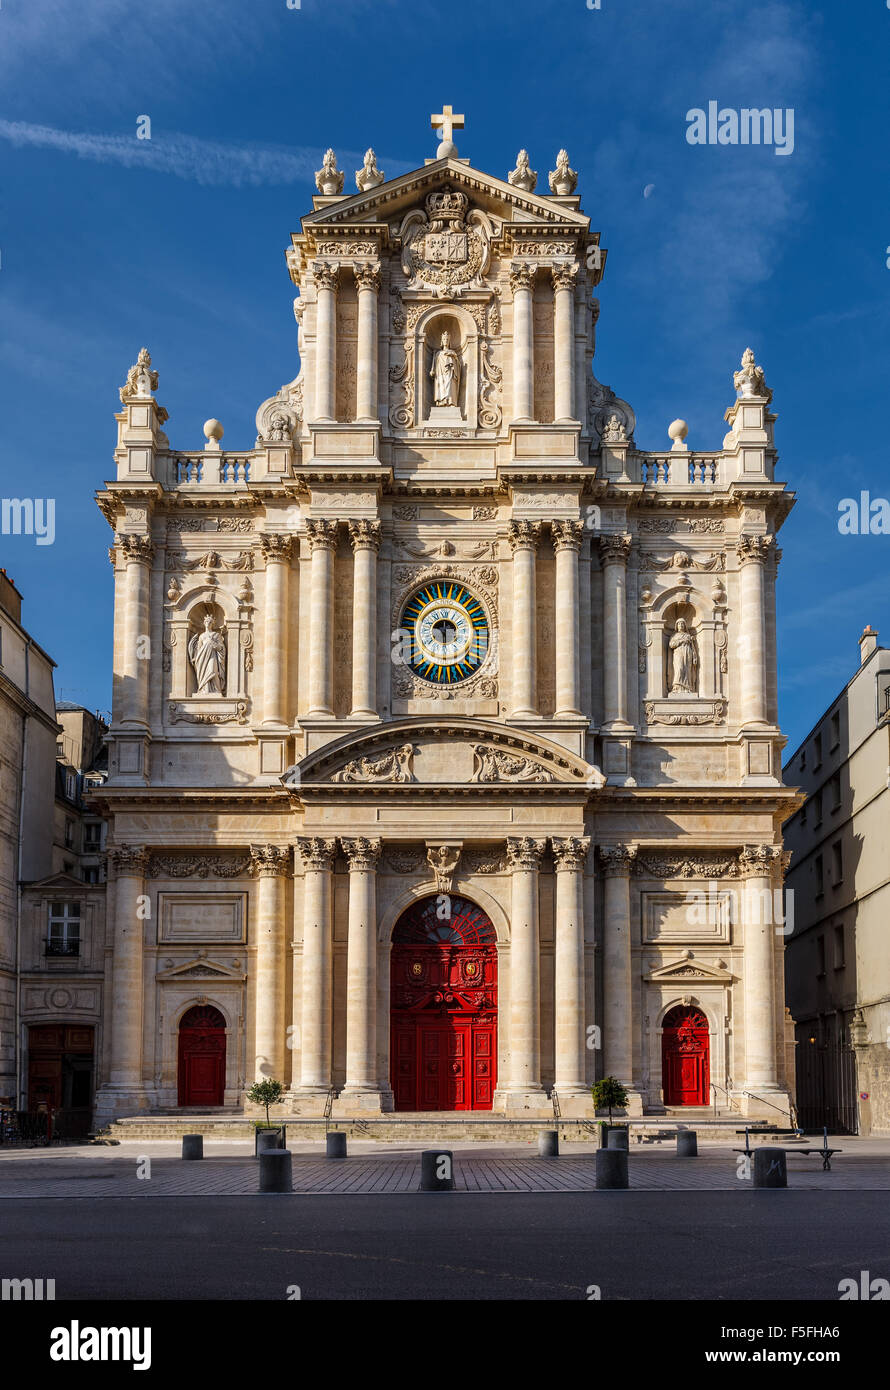 Facade of the church of Saint-Paul-Saint-Louis in the Marais neighborhood (4th arrondissement) of Paris, France. Stock Photo